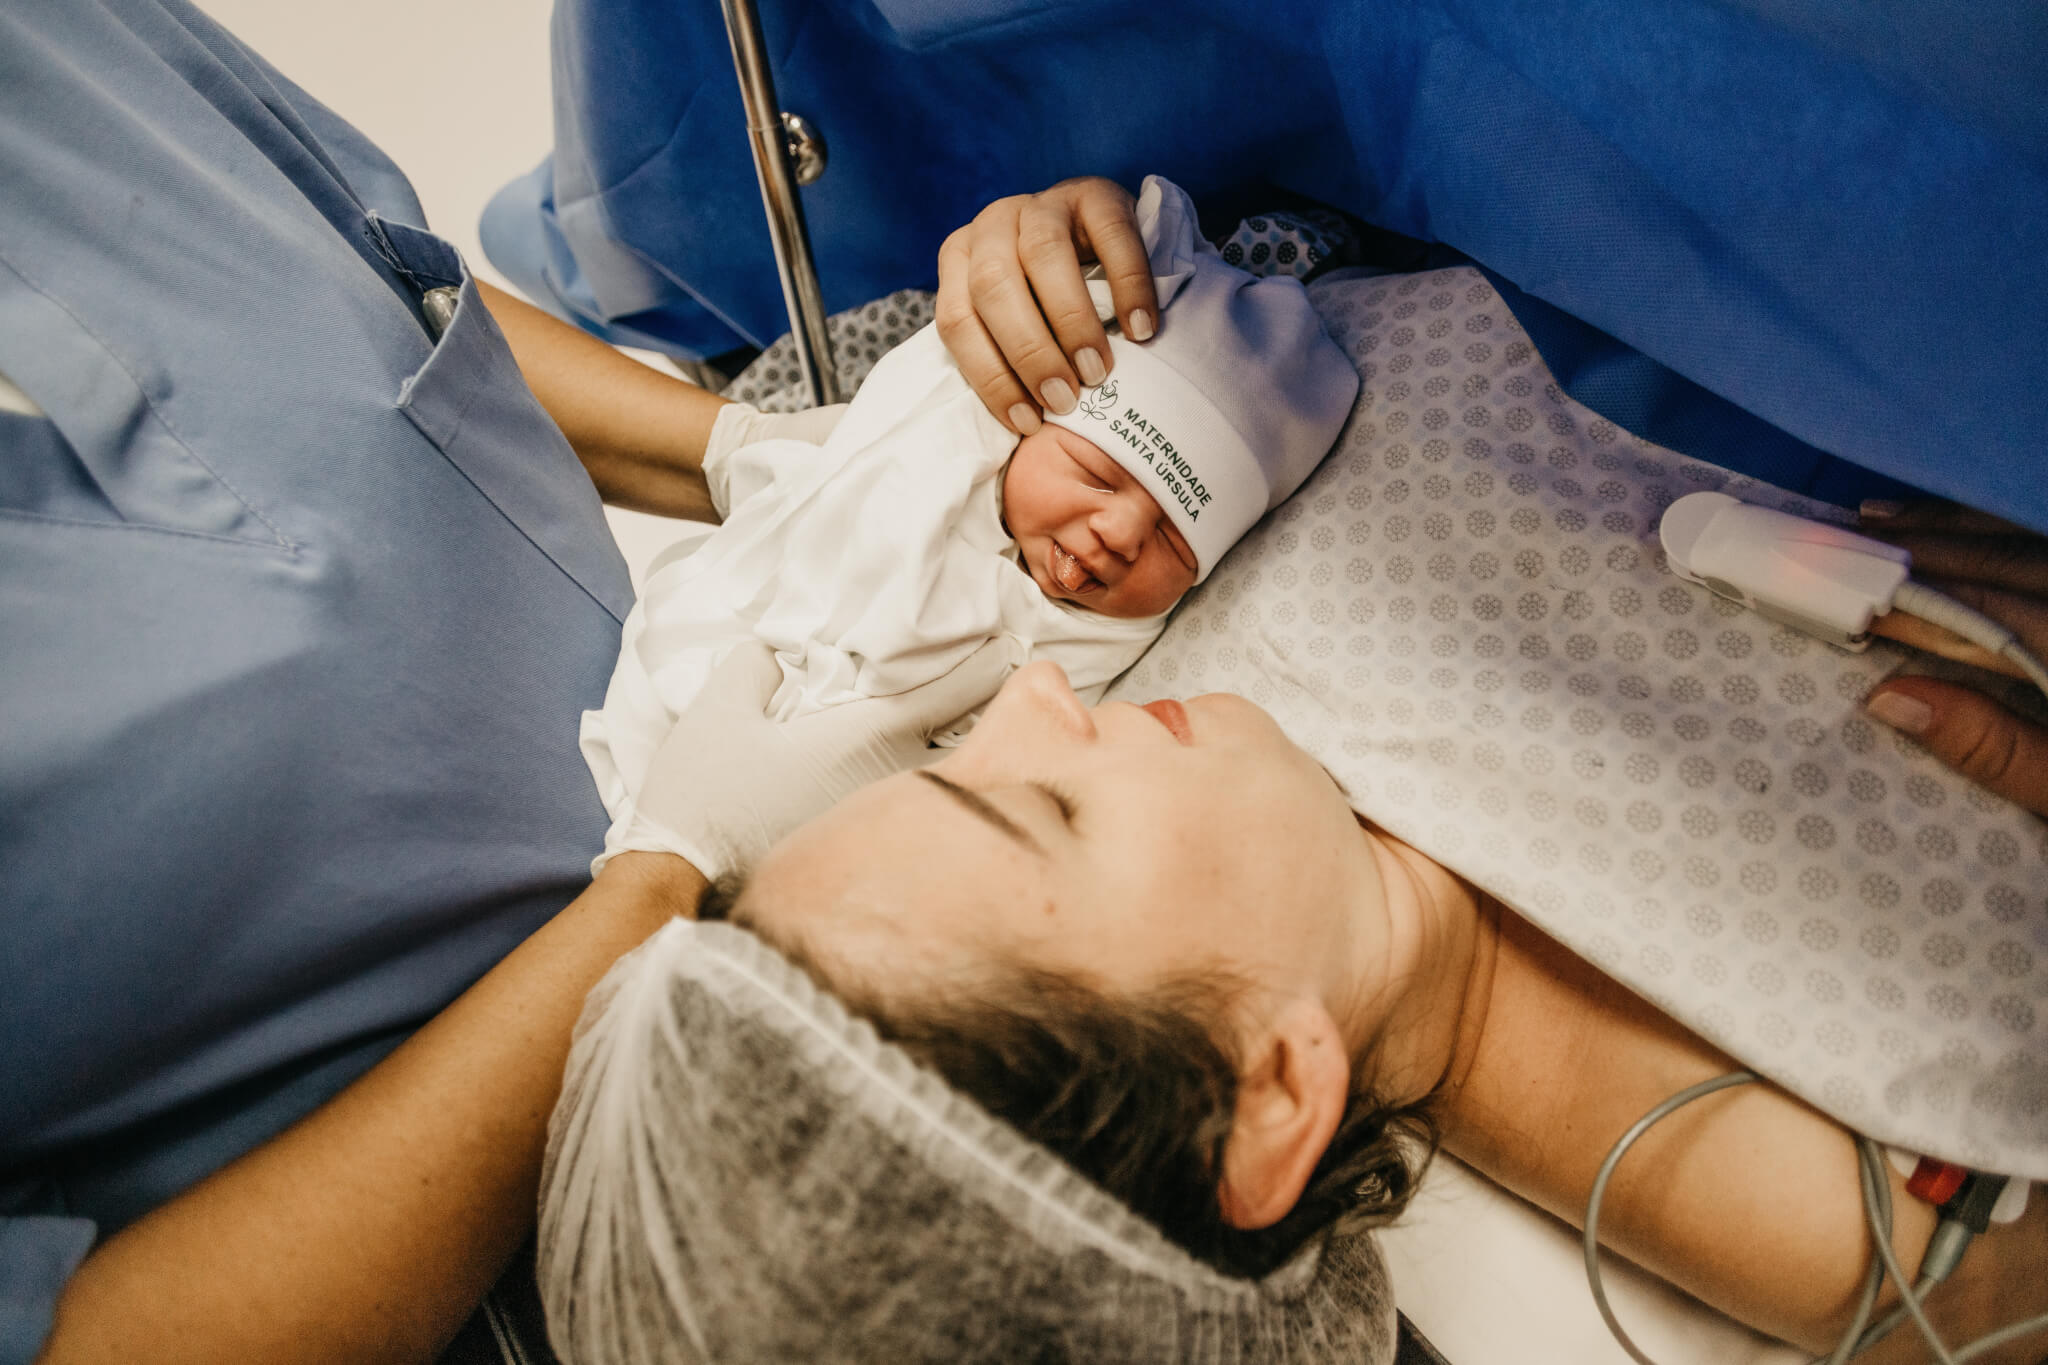 Baby born via c-section